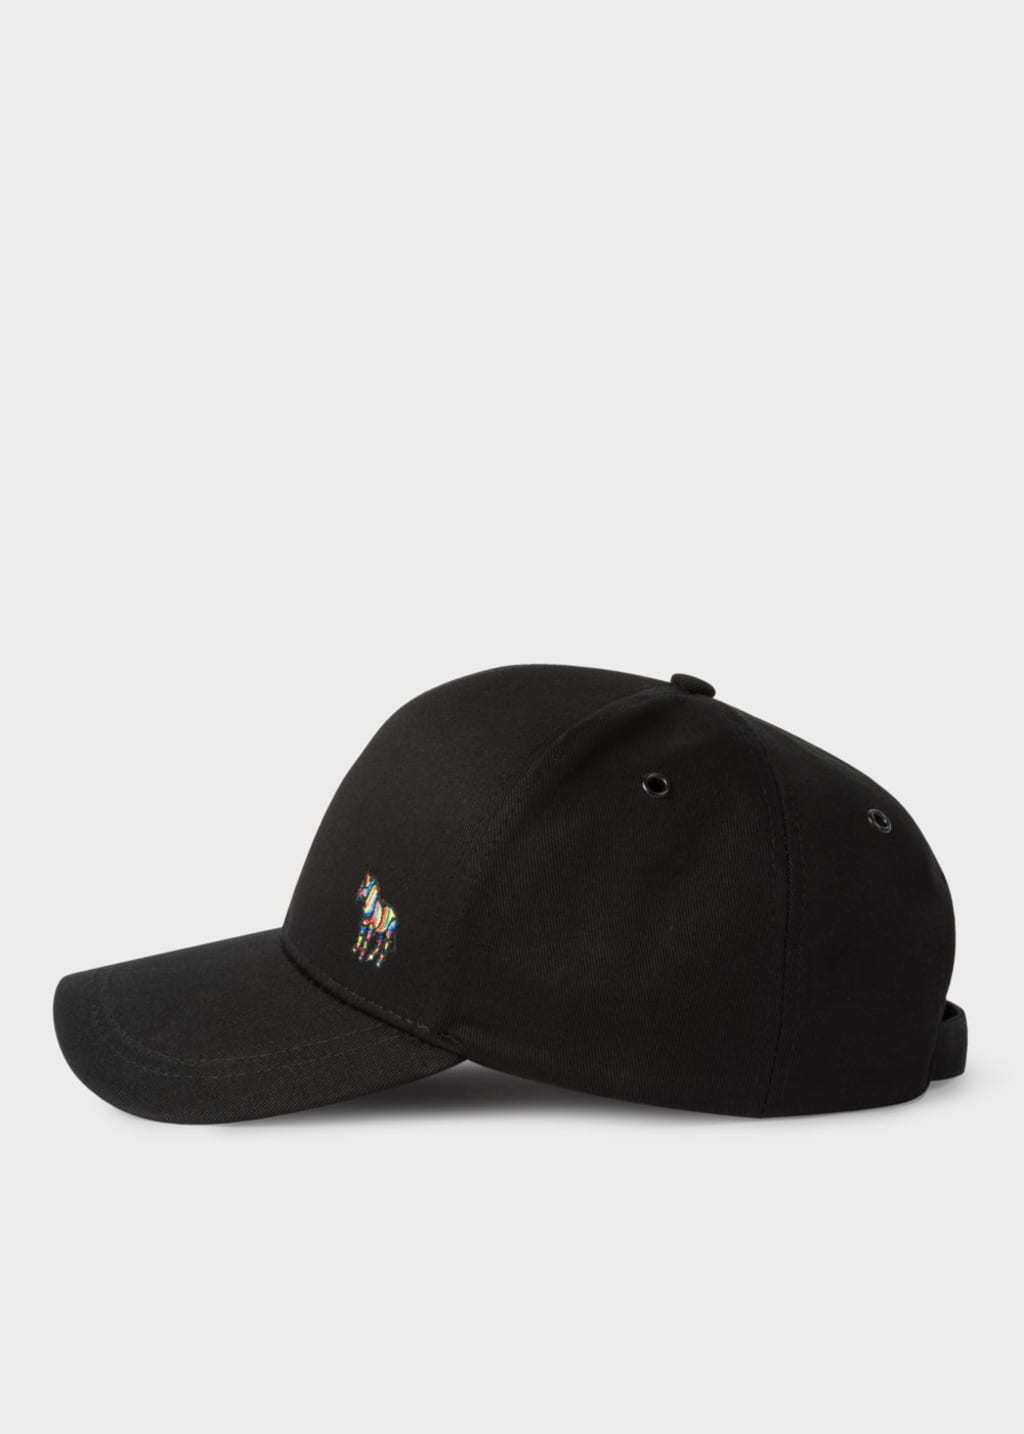 'Zebra' Black T-Shirt & Baseball Cap Gift Set by Paul Smith